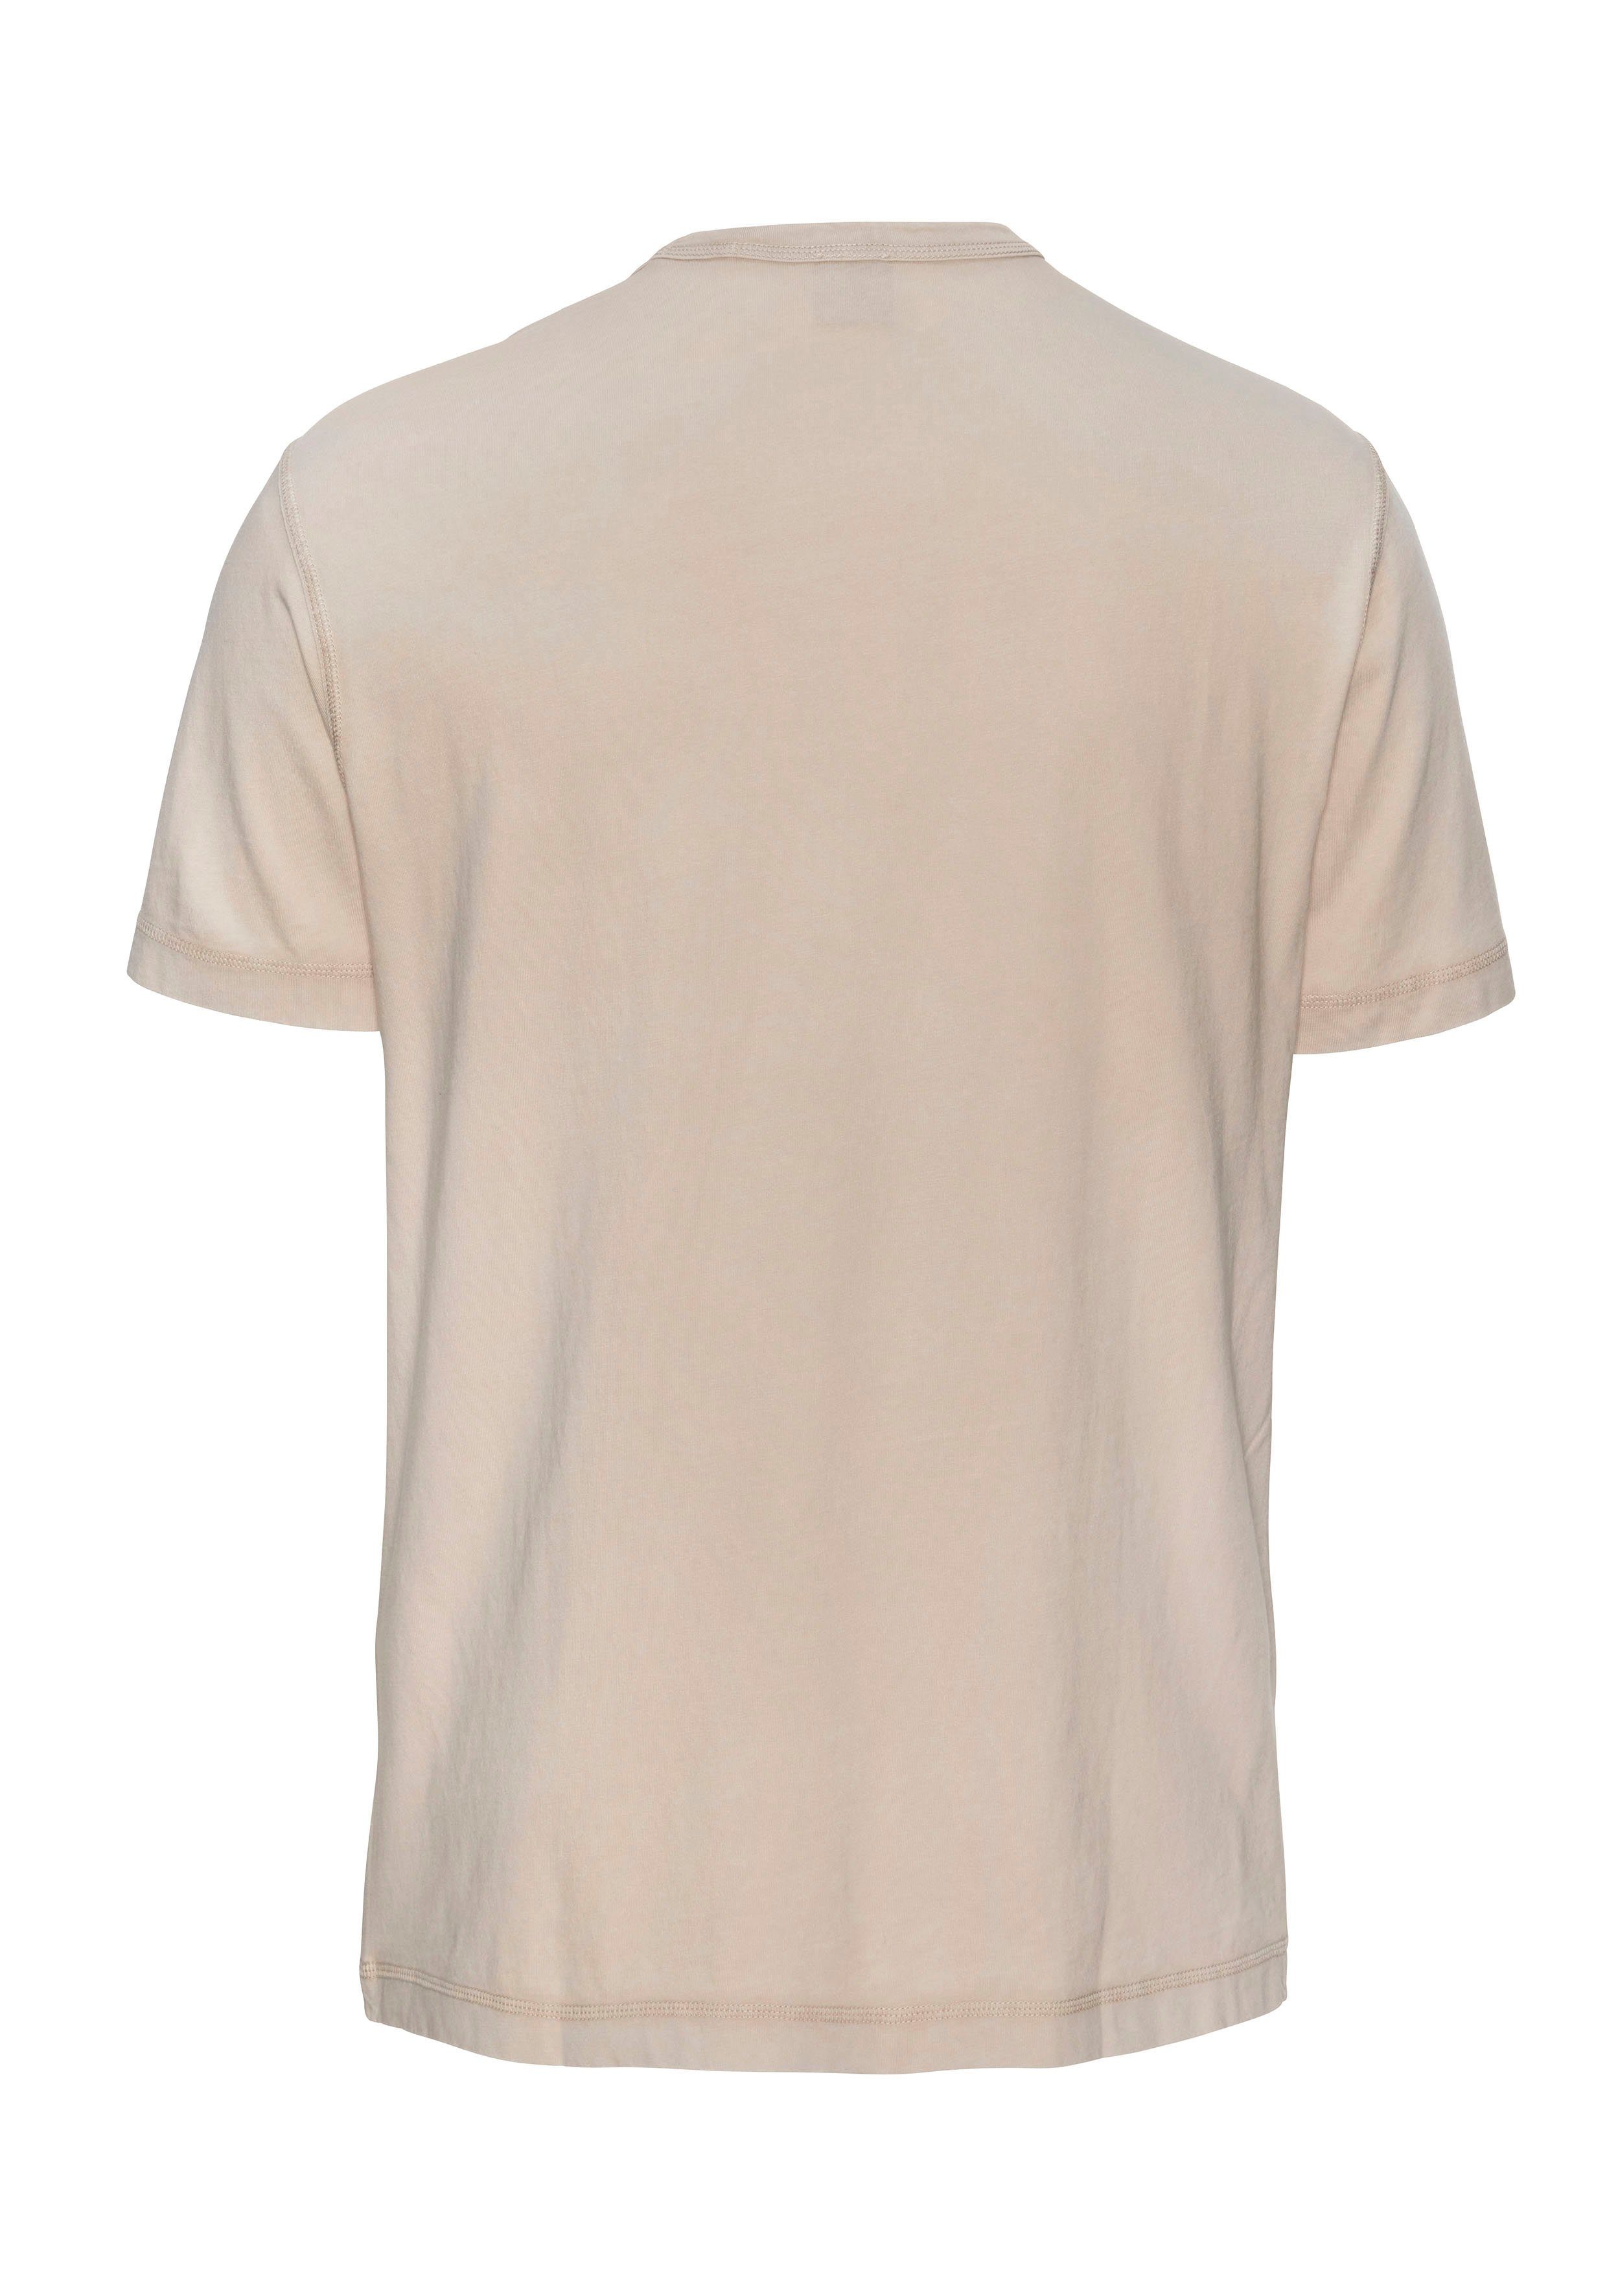 BOSS Markenlabel 271_Light_Beige ORANGE ORANGE BOSS mit T-Shirt Tokks